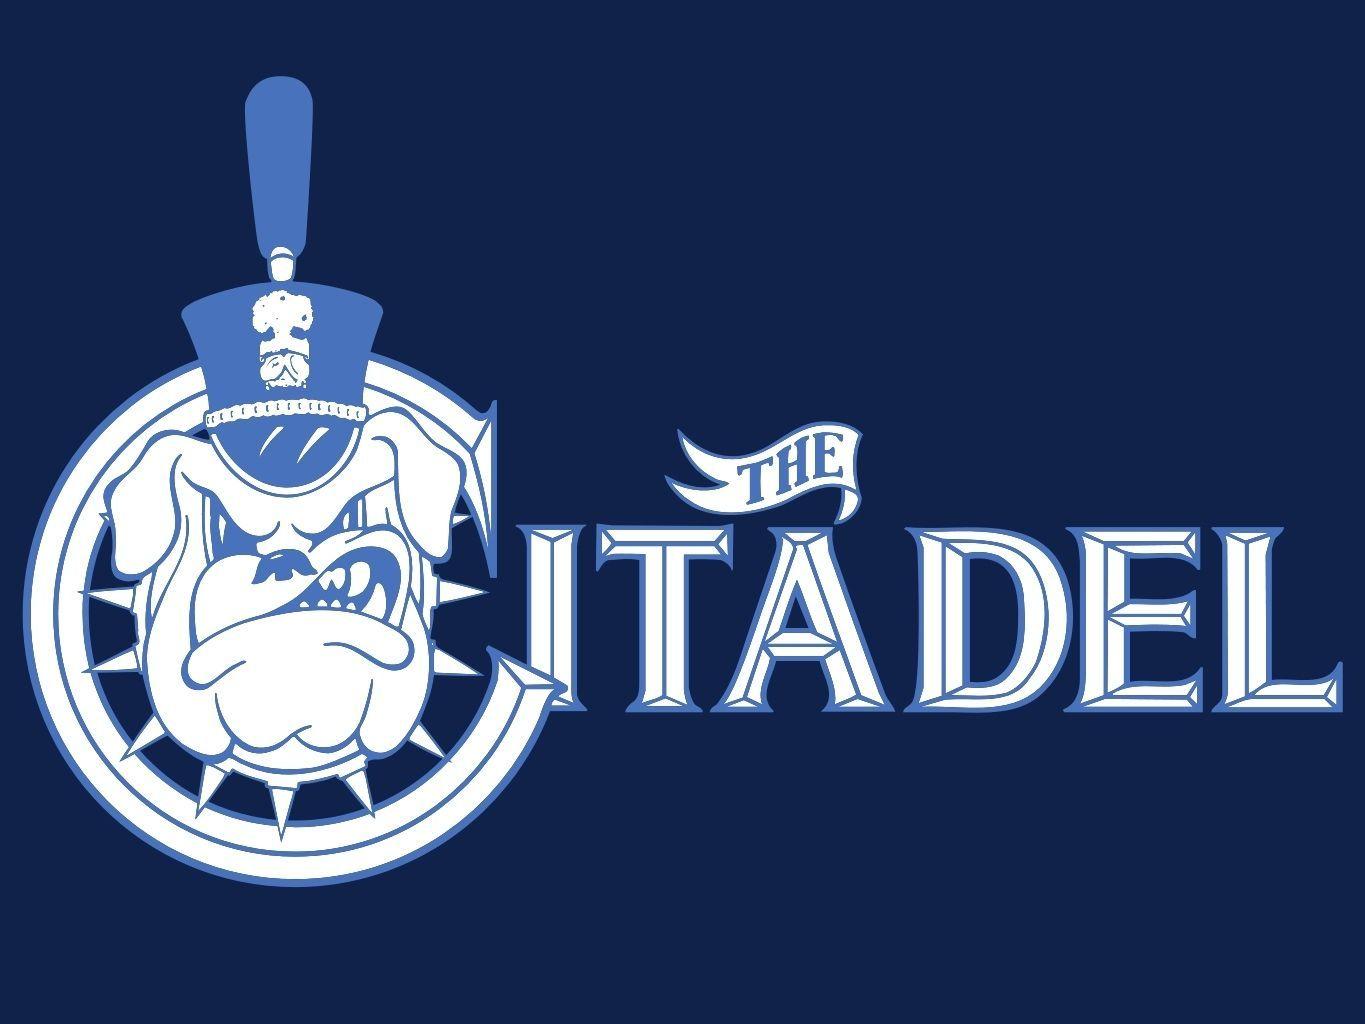 Citadel Logo - The Citadel (The Military College of South Carolina)- Bulldogs | The ...